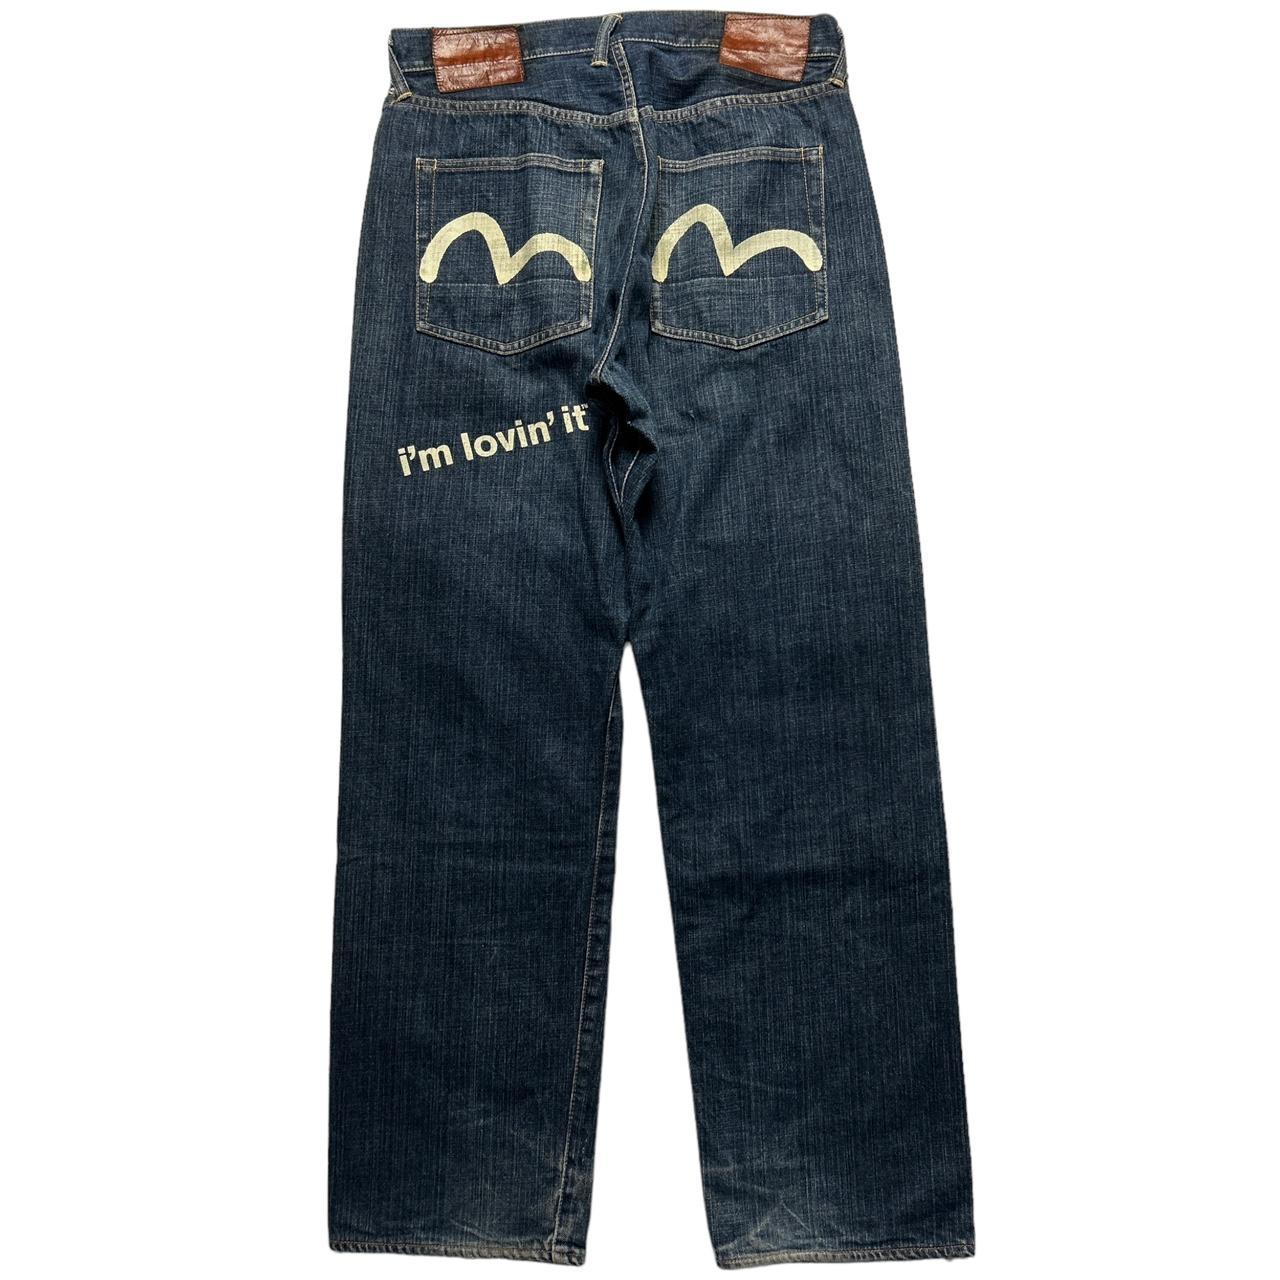 Evisu McDonald’s Jeans  (32")